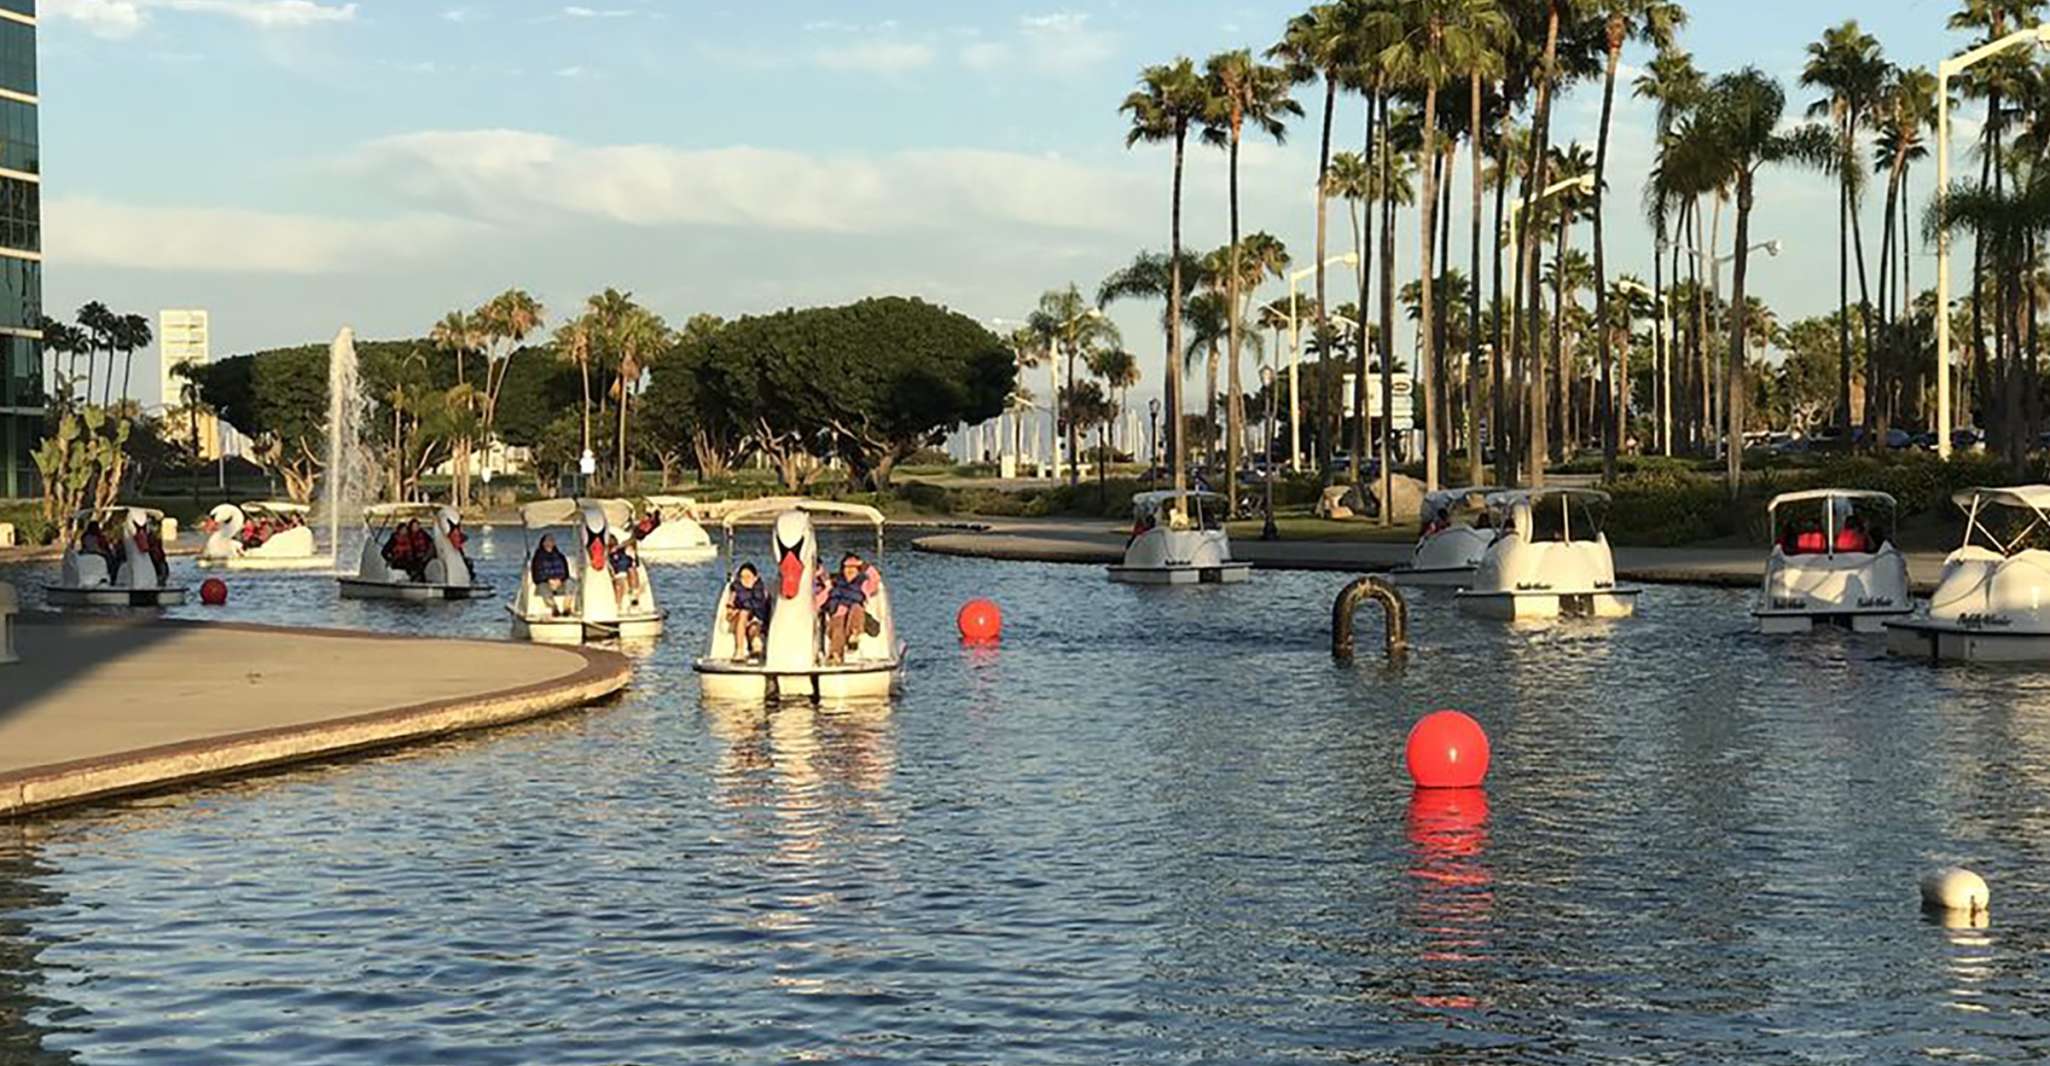 Long Beach, Swan Boat Rental at Rainbow Lagoon - Housity